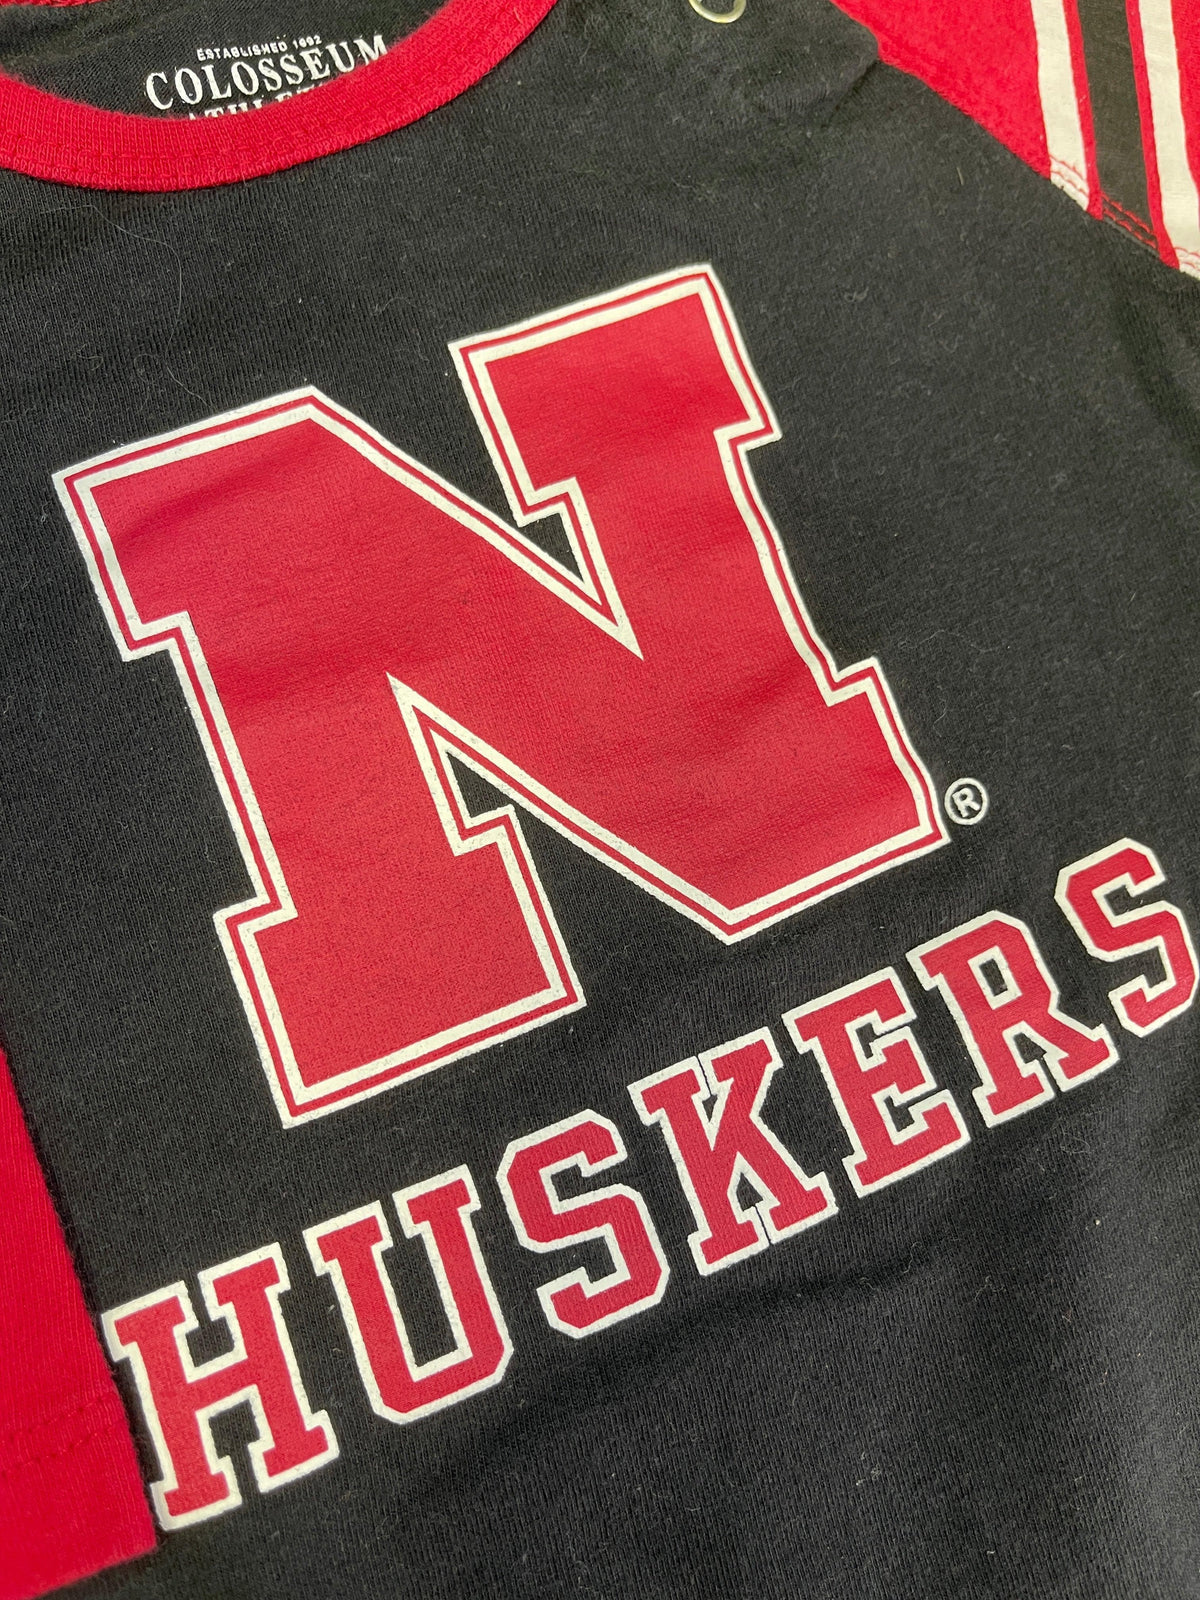 NCAA Nebraska Cornhuskers Black Long-Sleeve Bodysuit 3-6 months